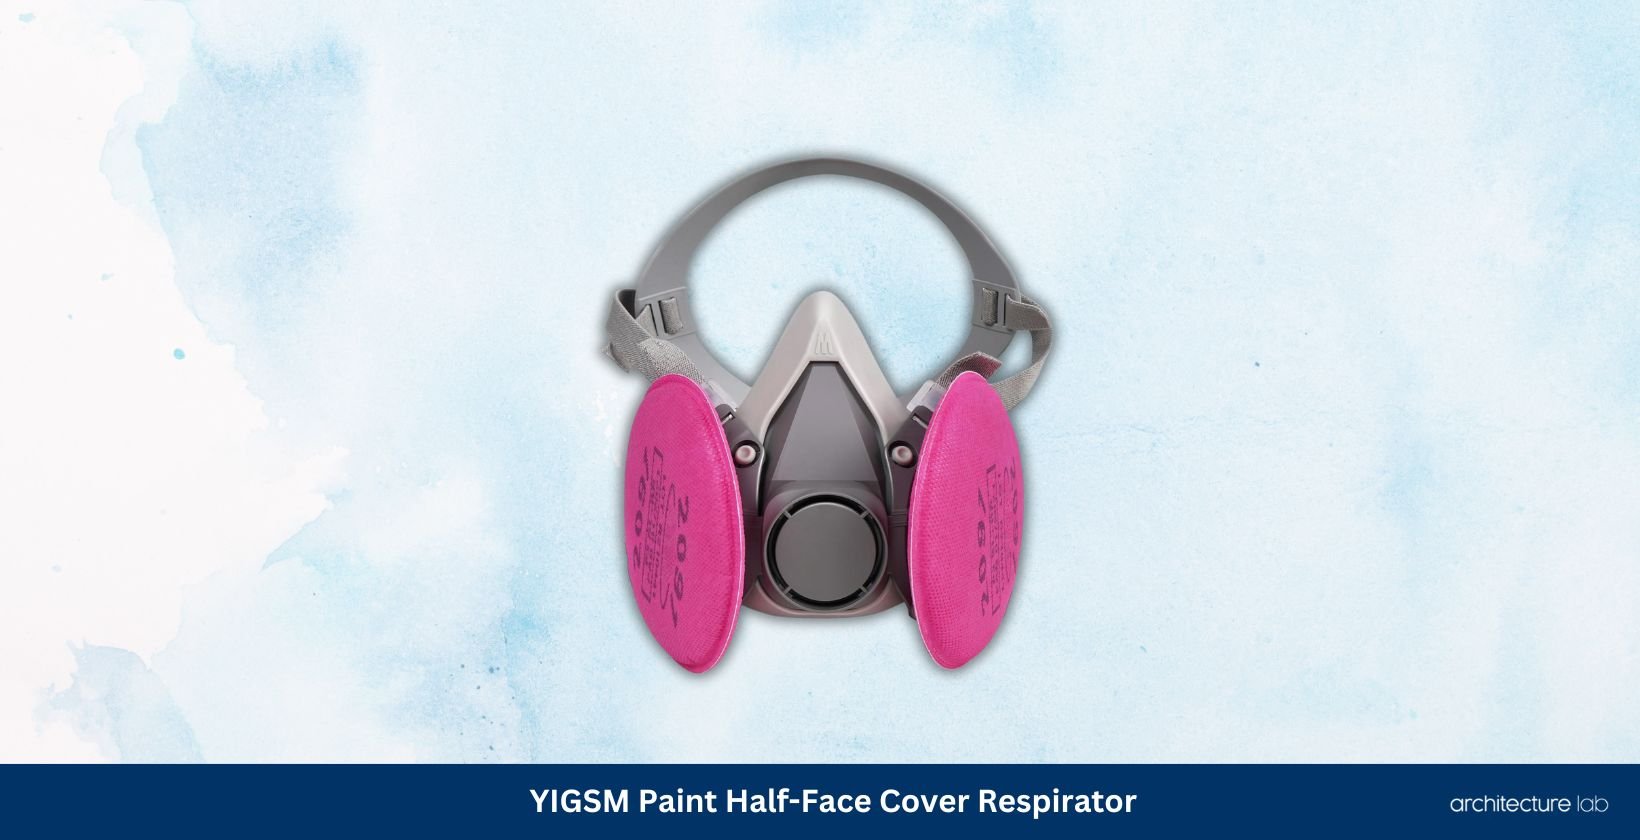 Yigsm paint half face cover respirator